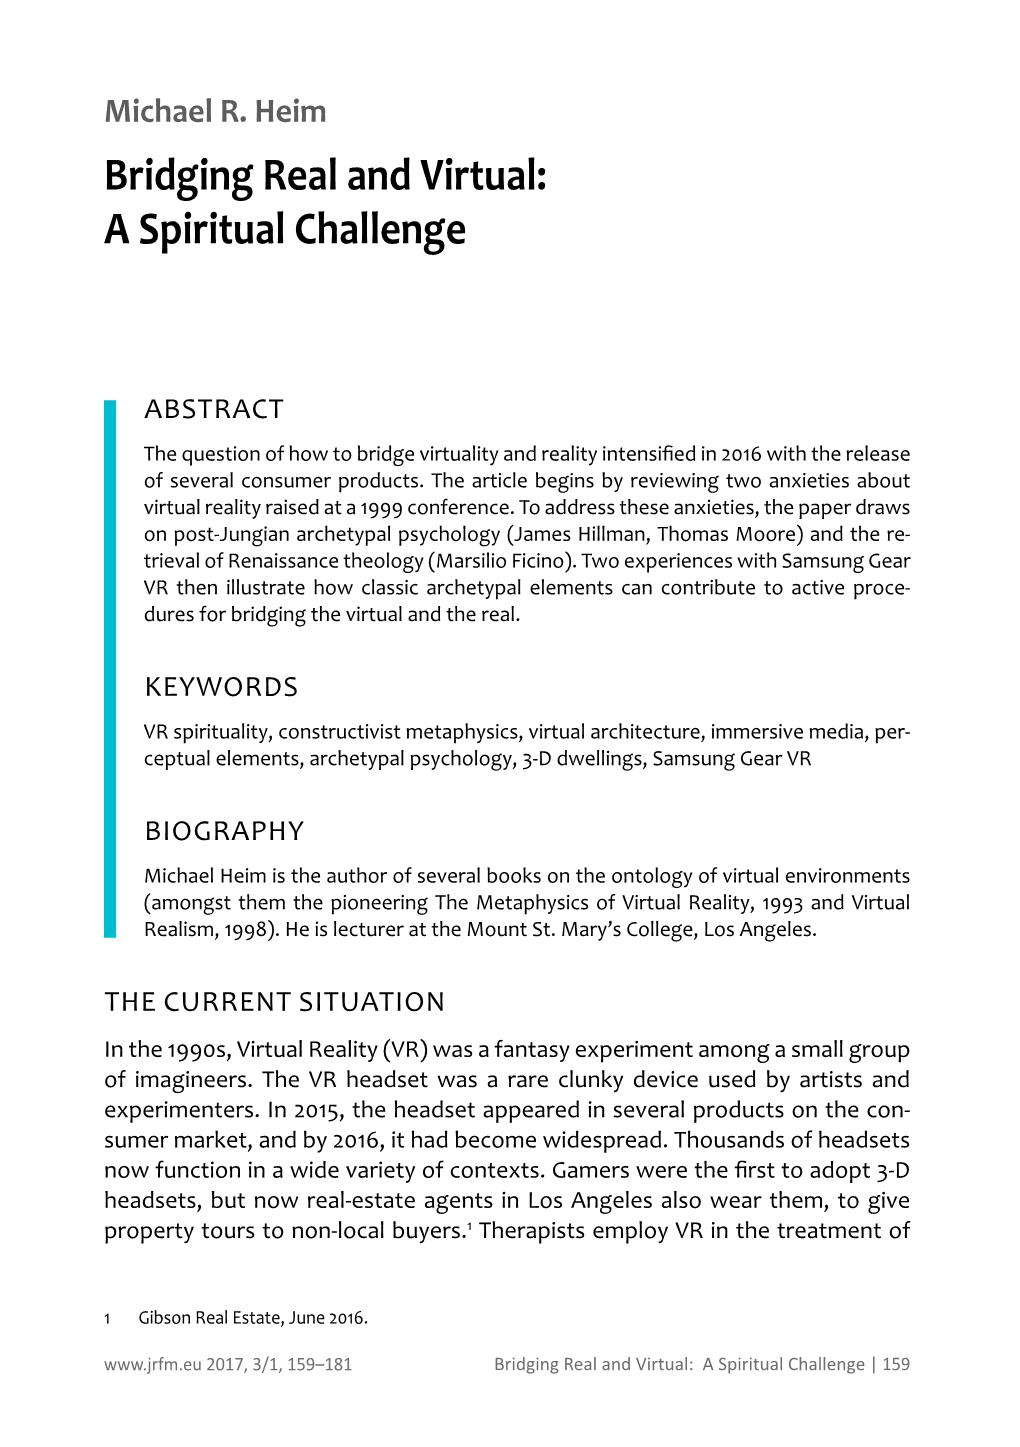 Bridging Real and Virtual: a Spiritual Challenge